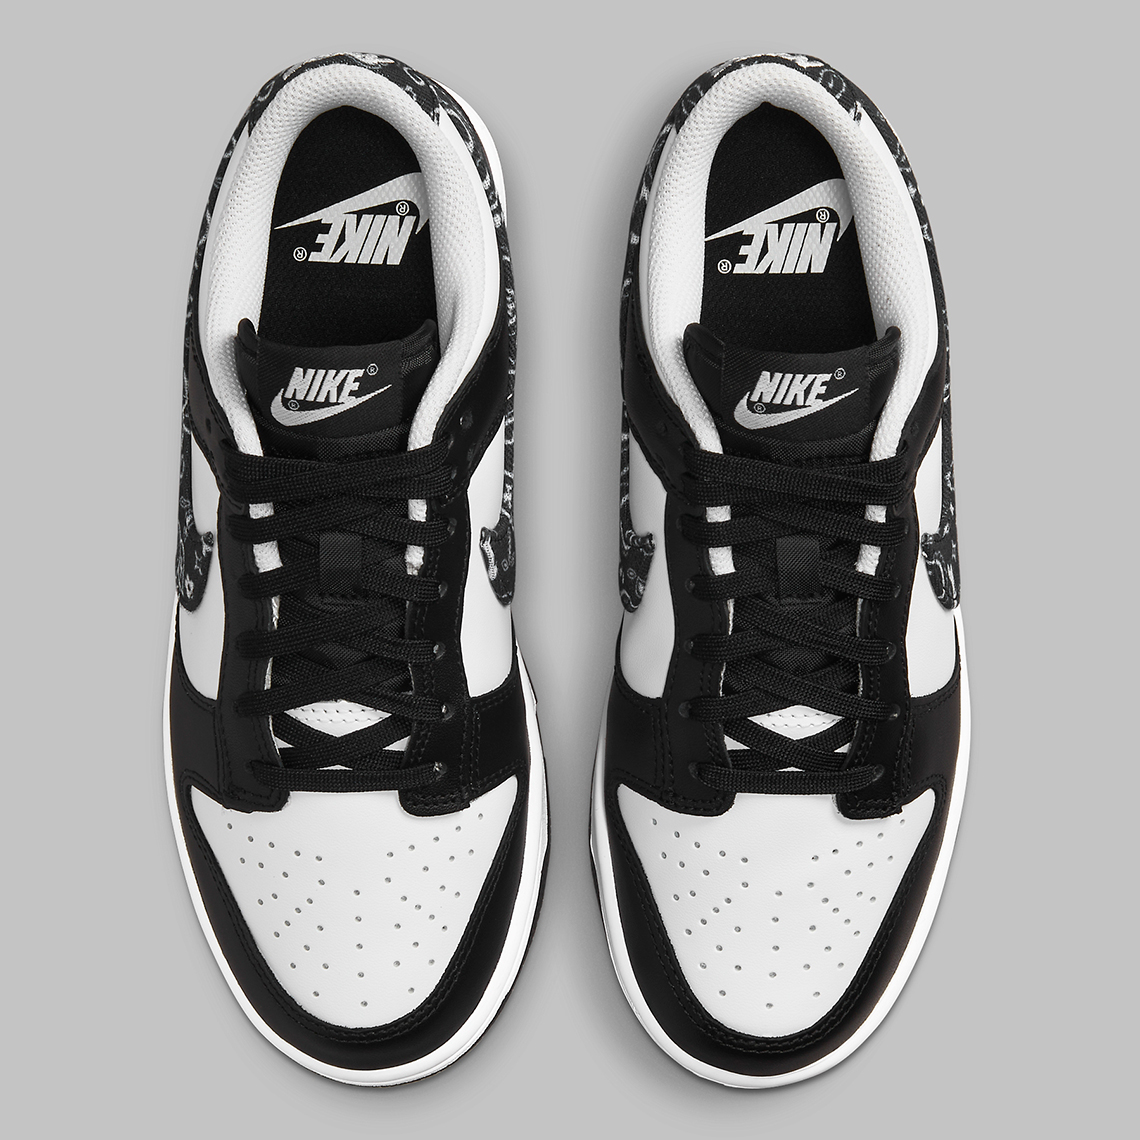 nike air marauders shoes online Black White Paisley Panda Dh4401 100 3